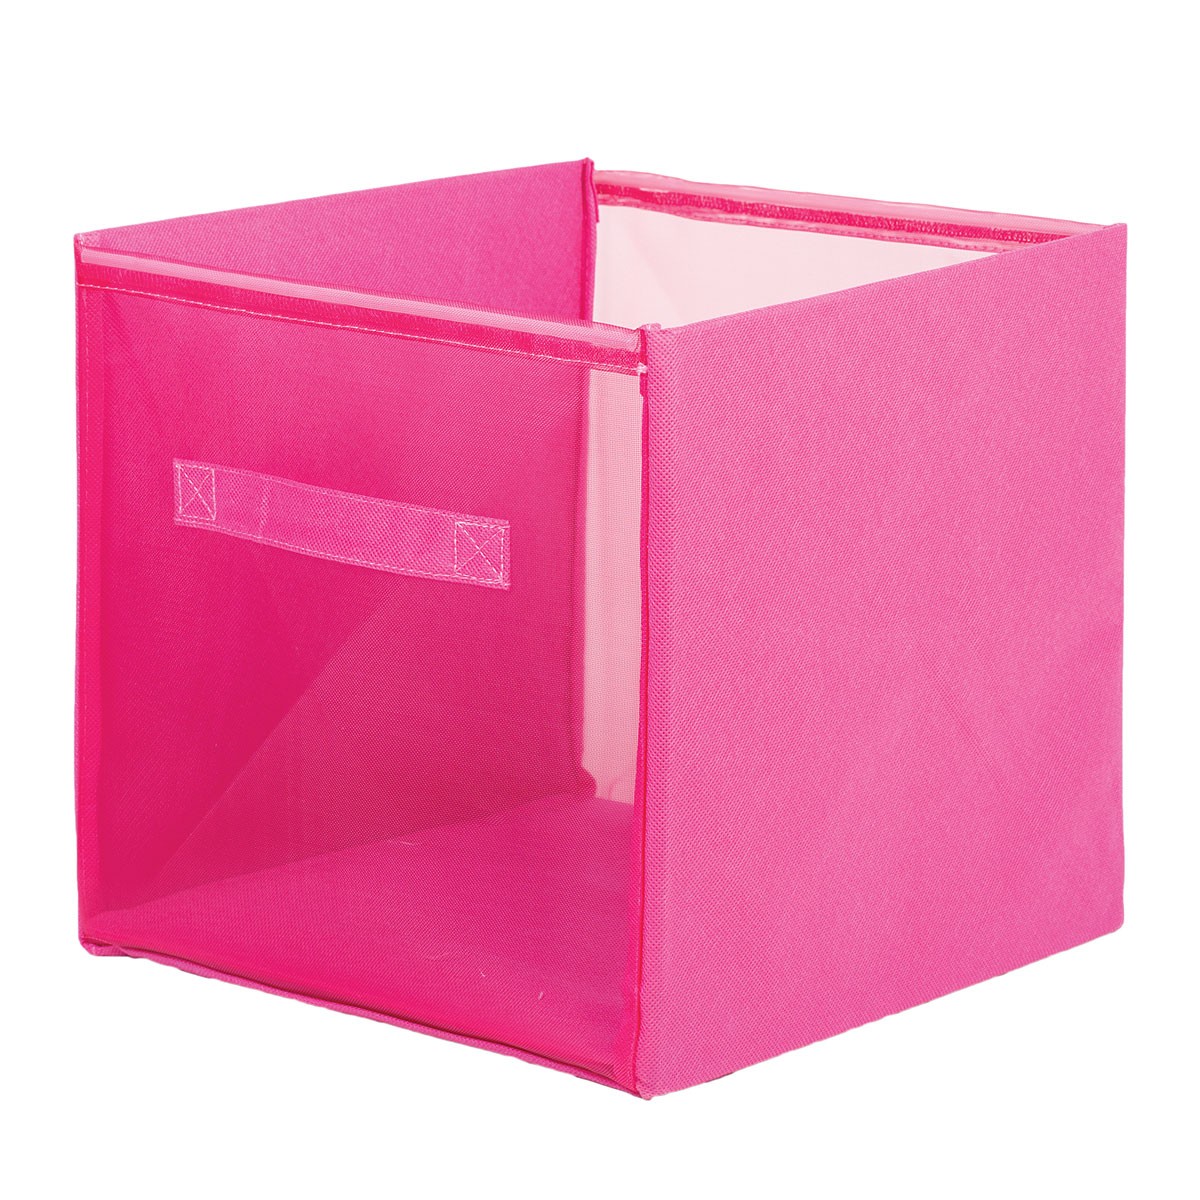 Innovative Home Creations Yarn & Craft Storage Cube -Pink 12x12x12